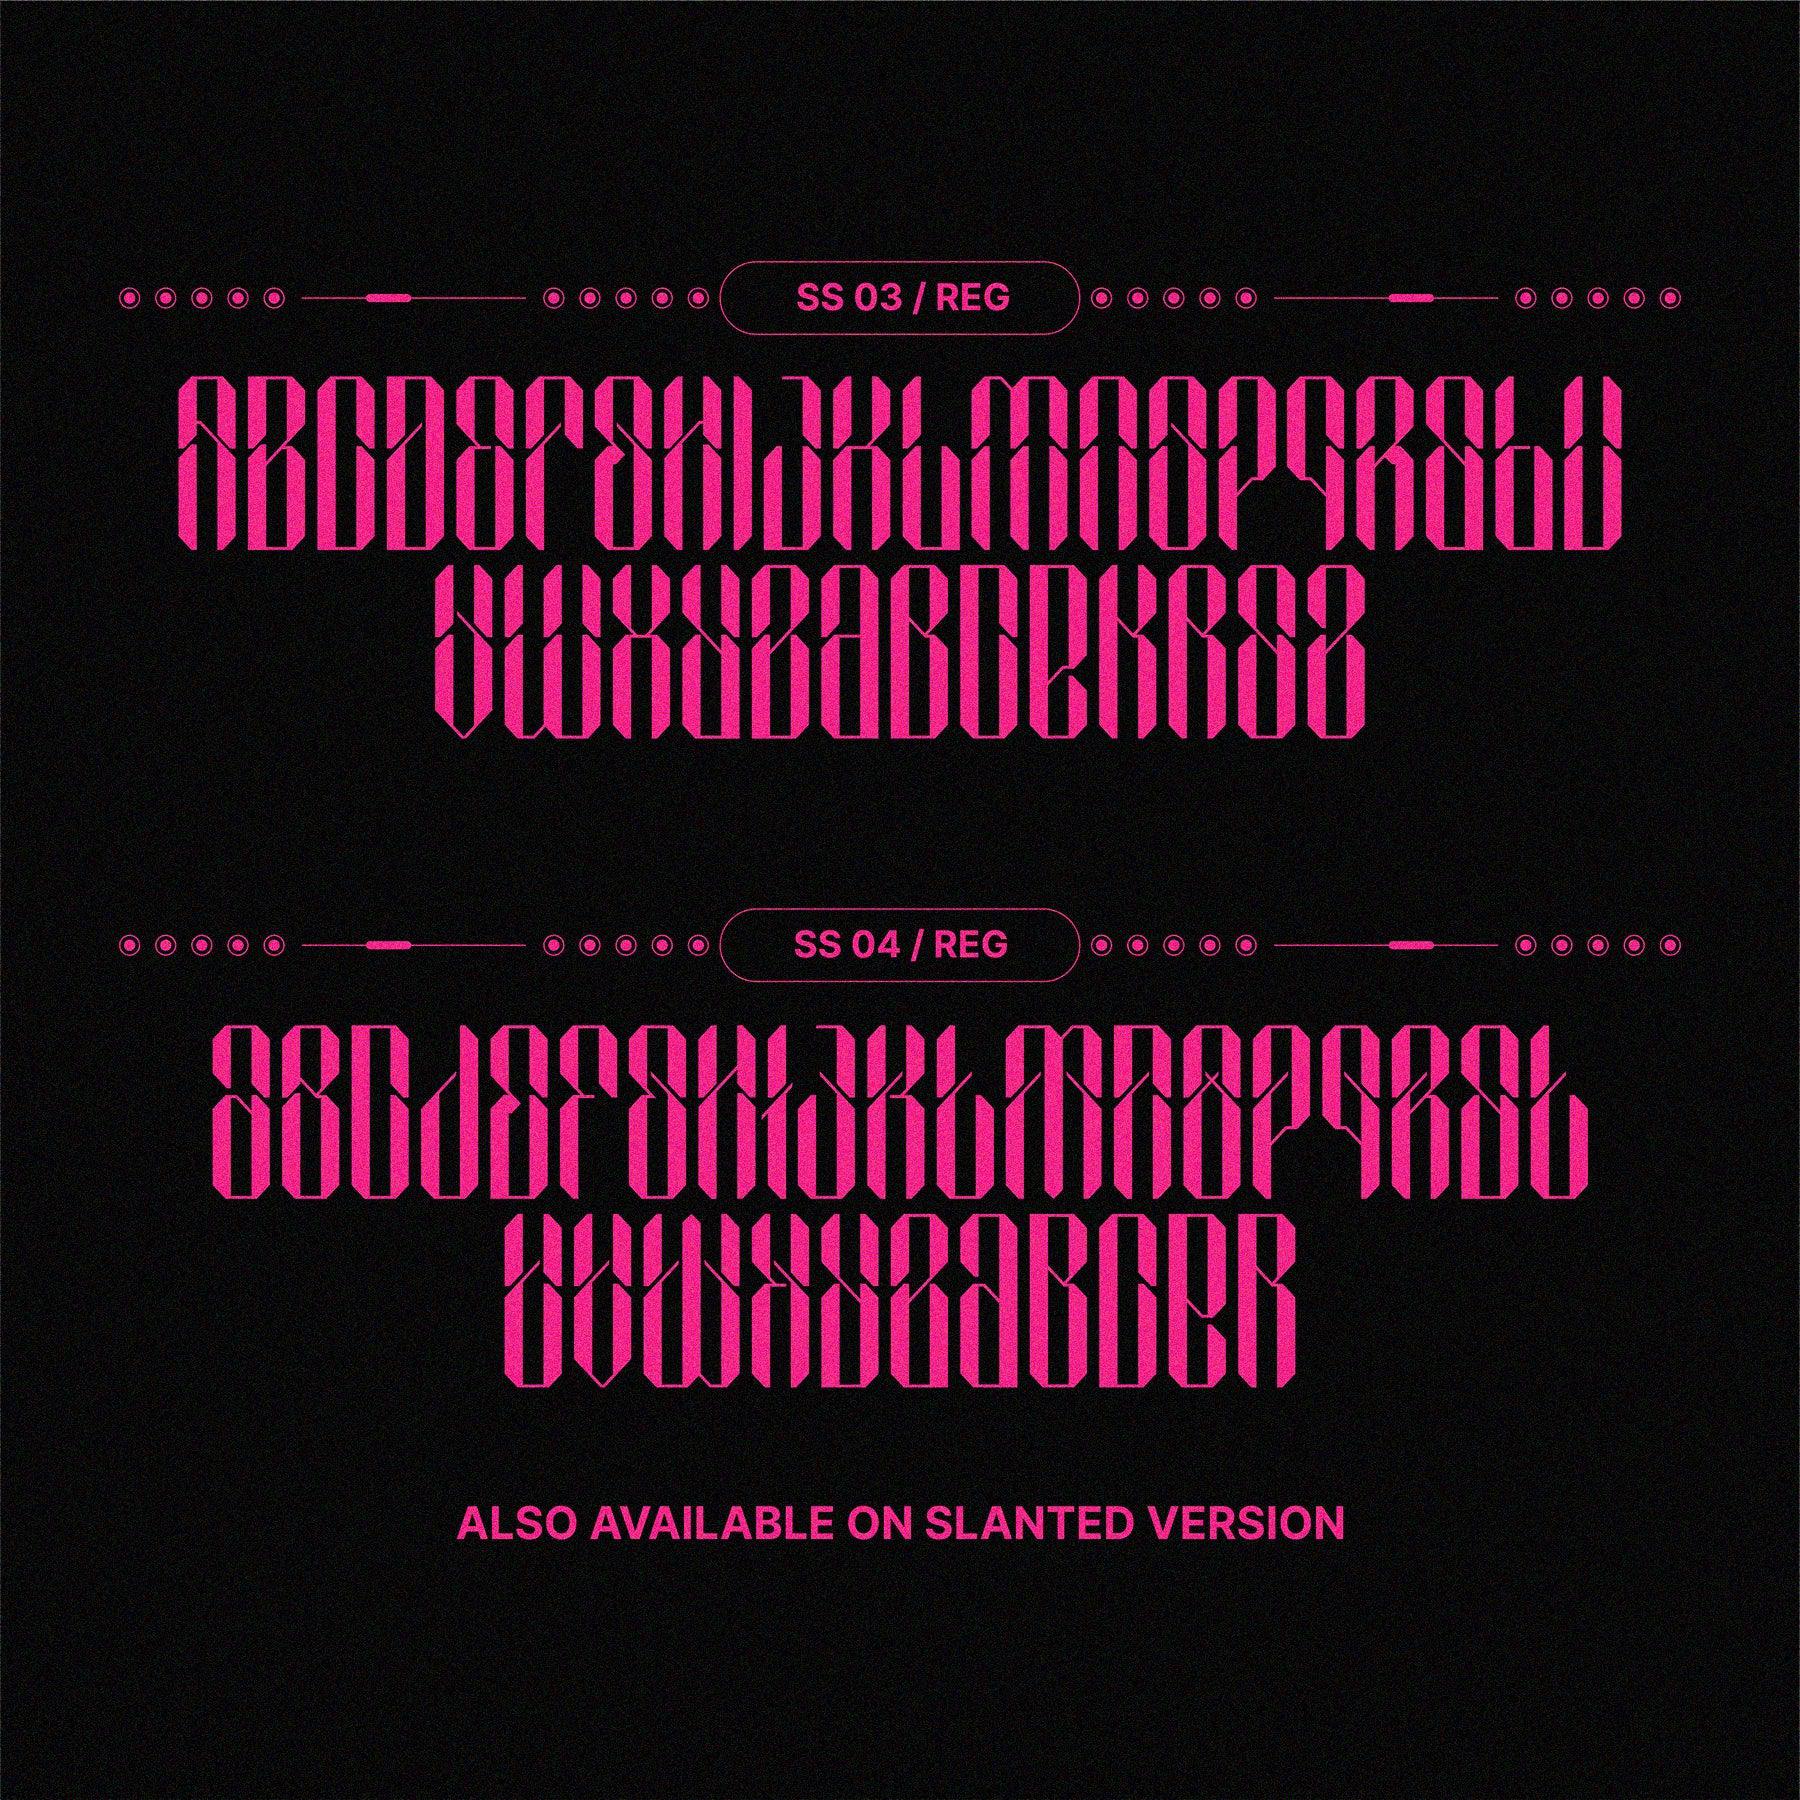 NCL Sephyrok - Cyberpunk Futuristic Tech Condensed Font